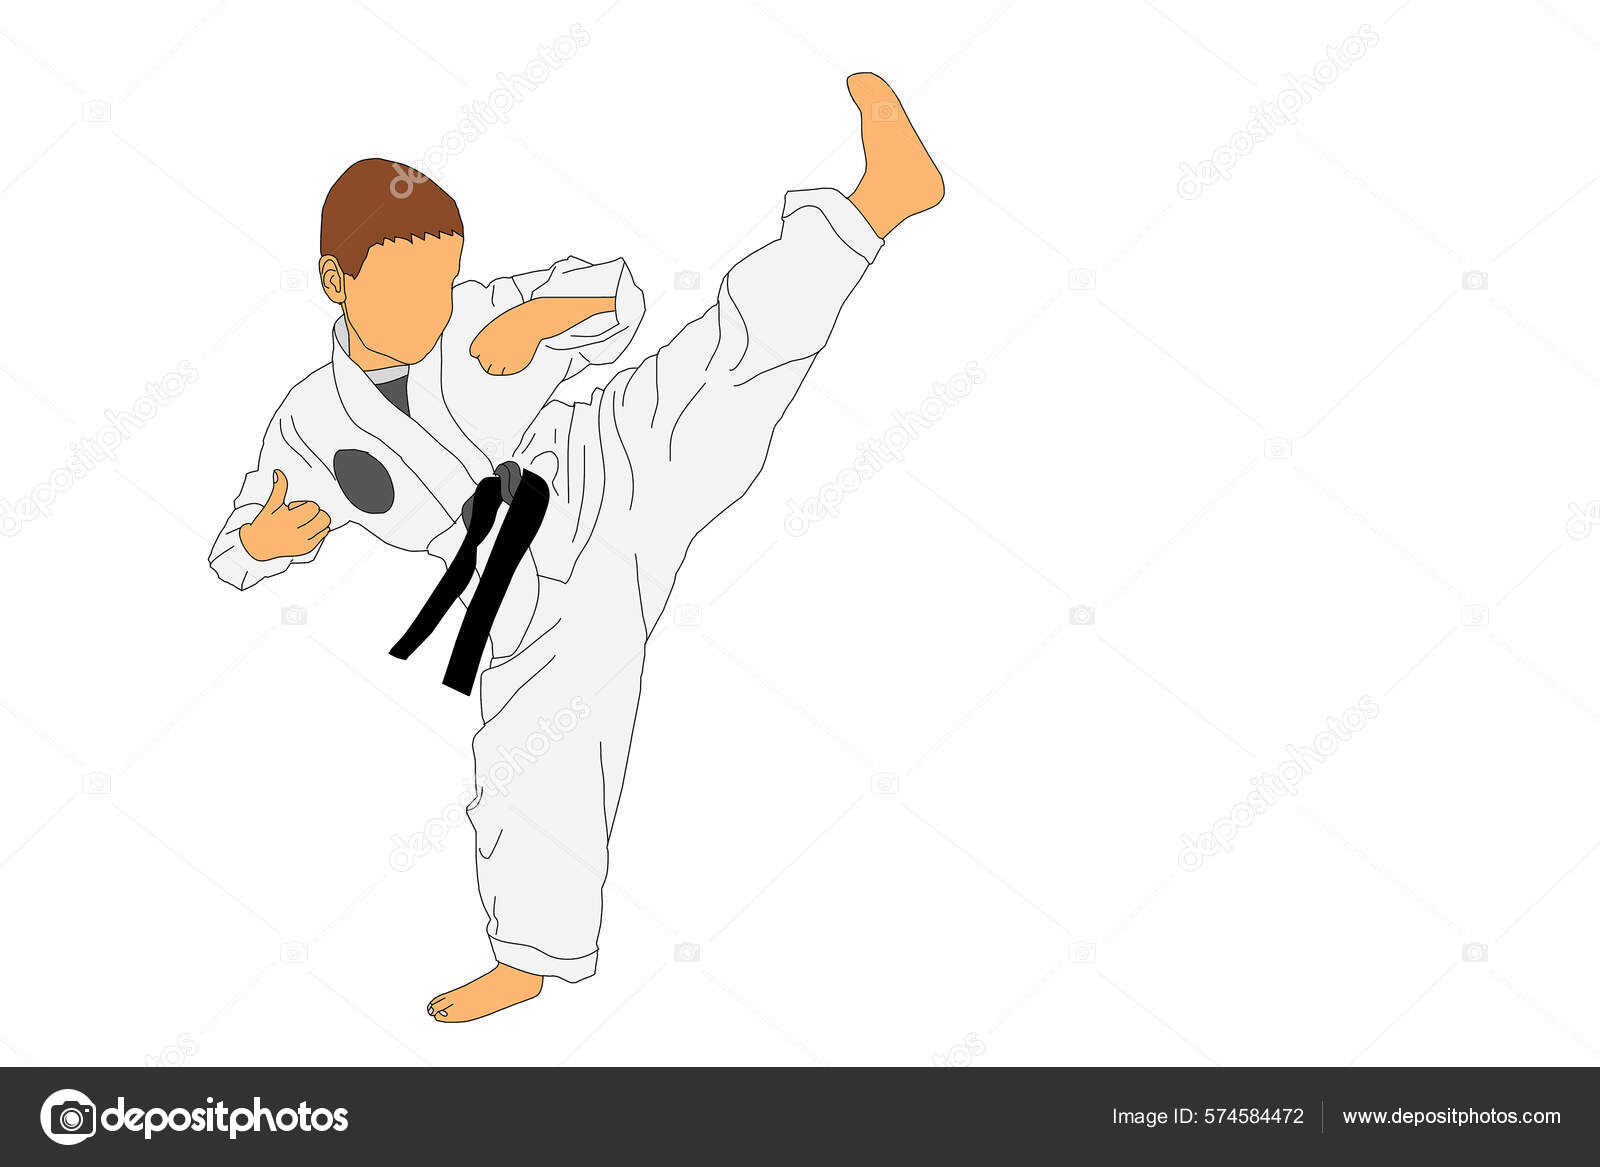 Karate kid cartoon Stock Photos, Royalty Free Karate kid cartoon Images |  Depositphotos